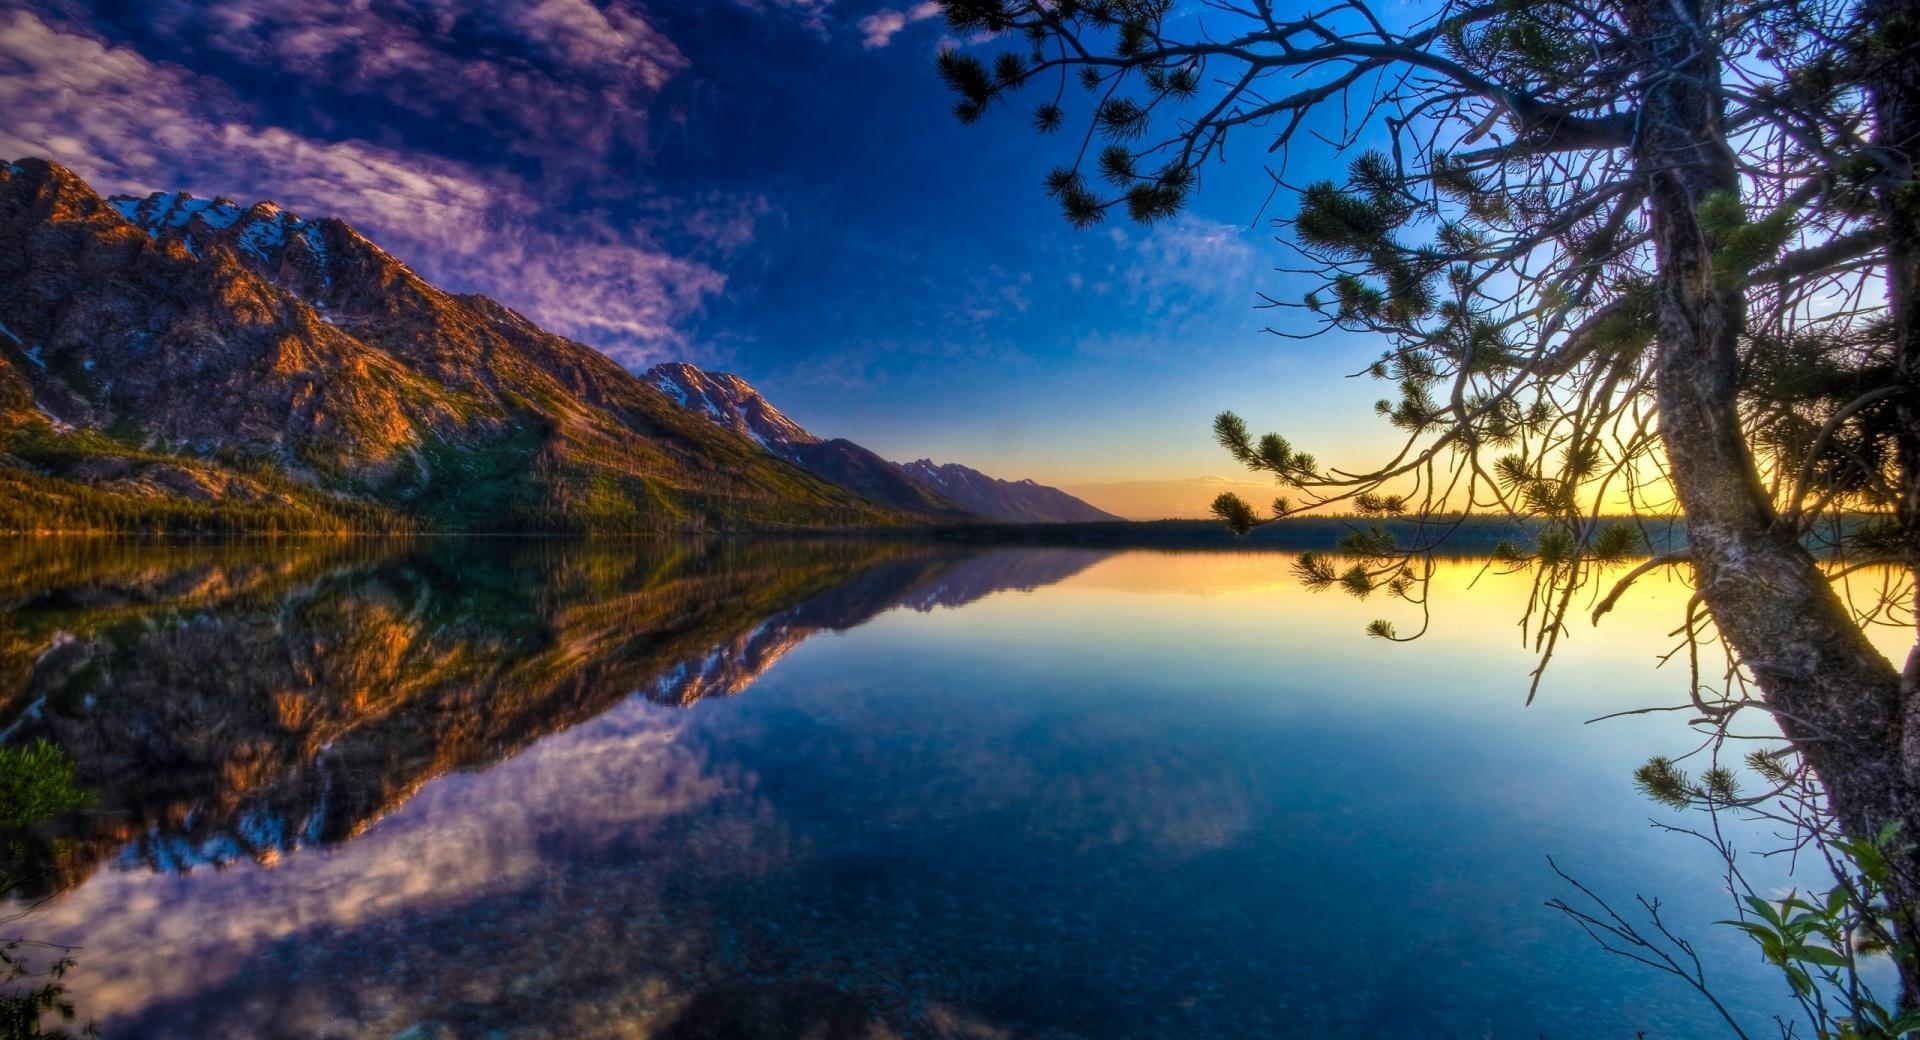 Beautiful Lake at 1280 x 960 size wallpapers HD quality